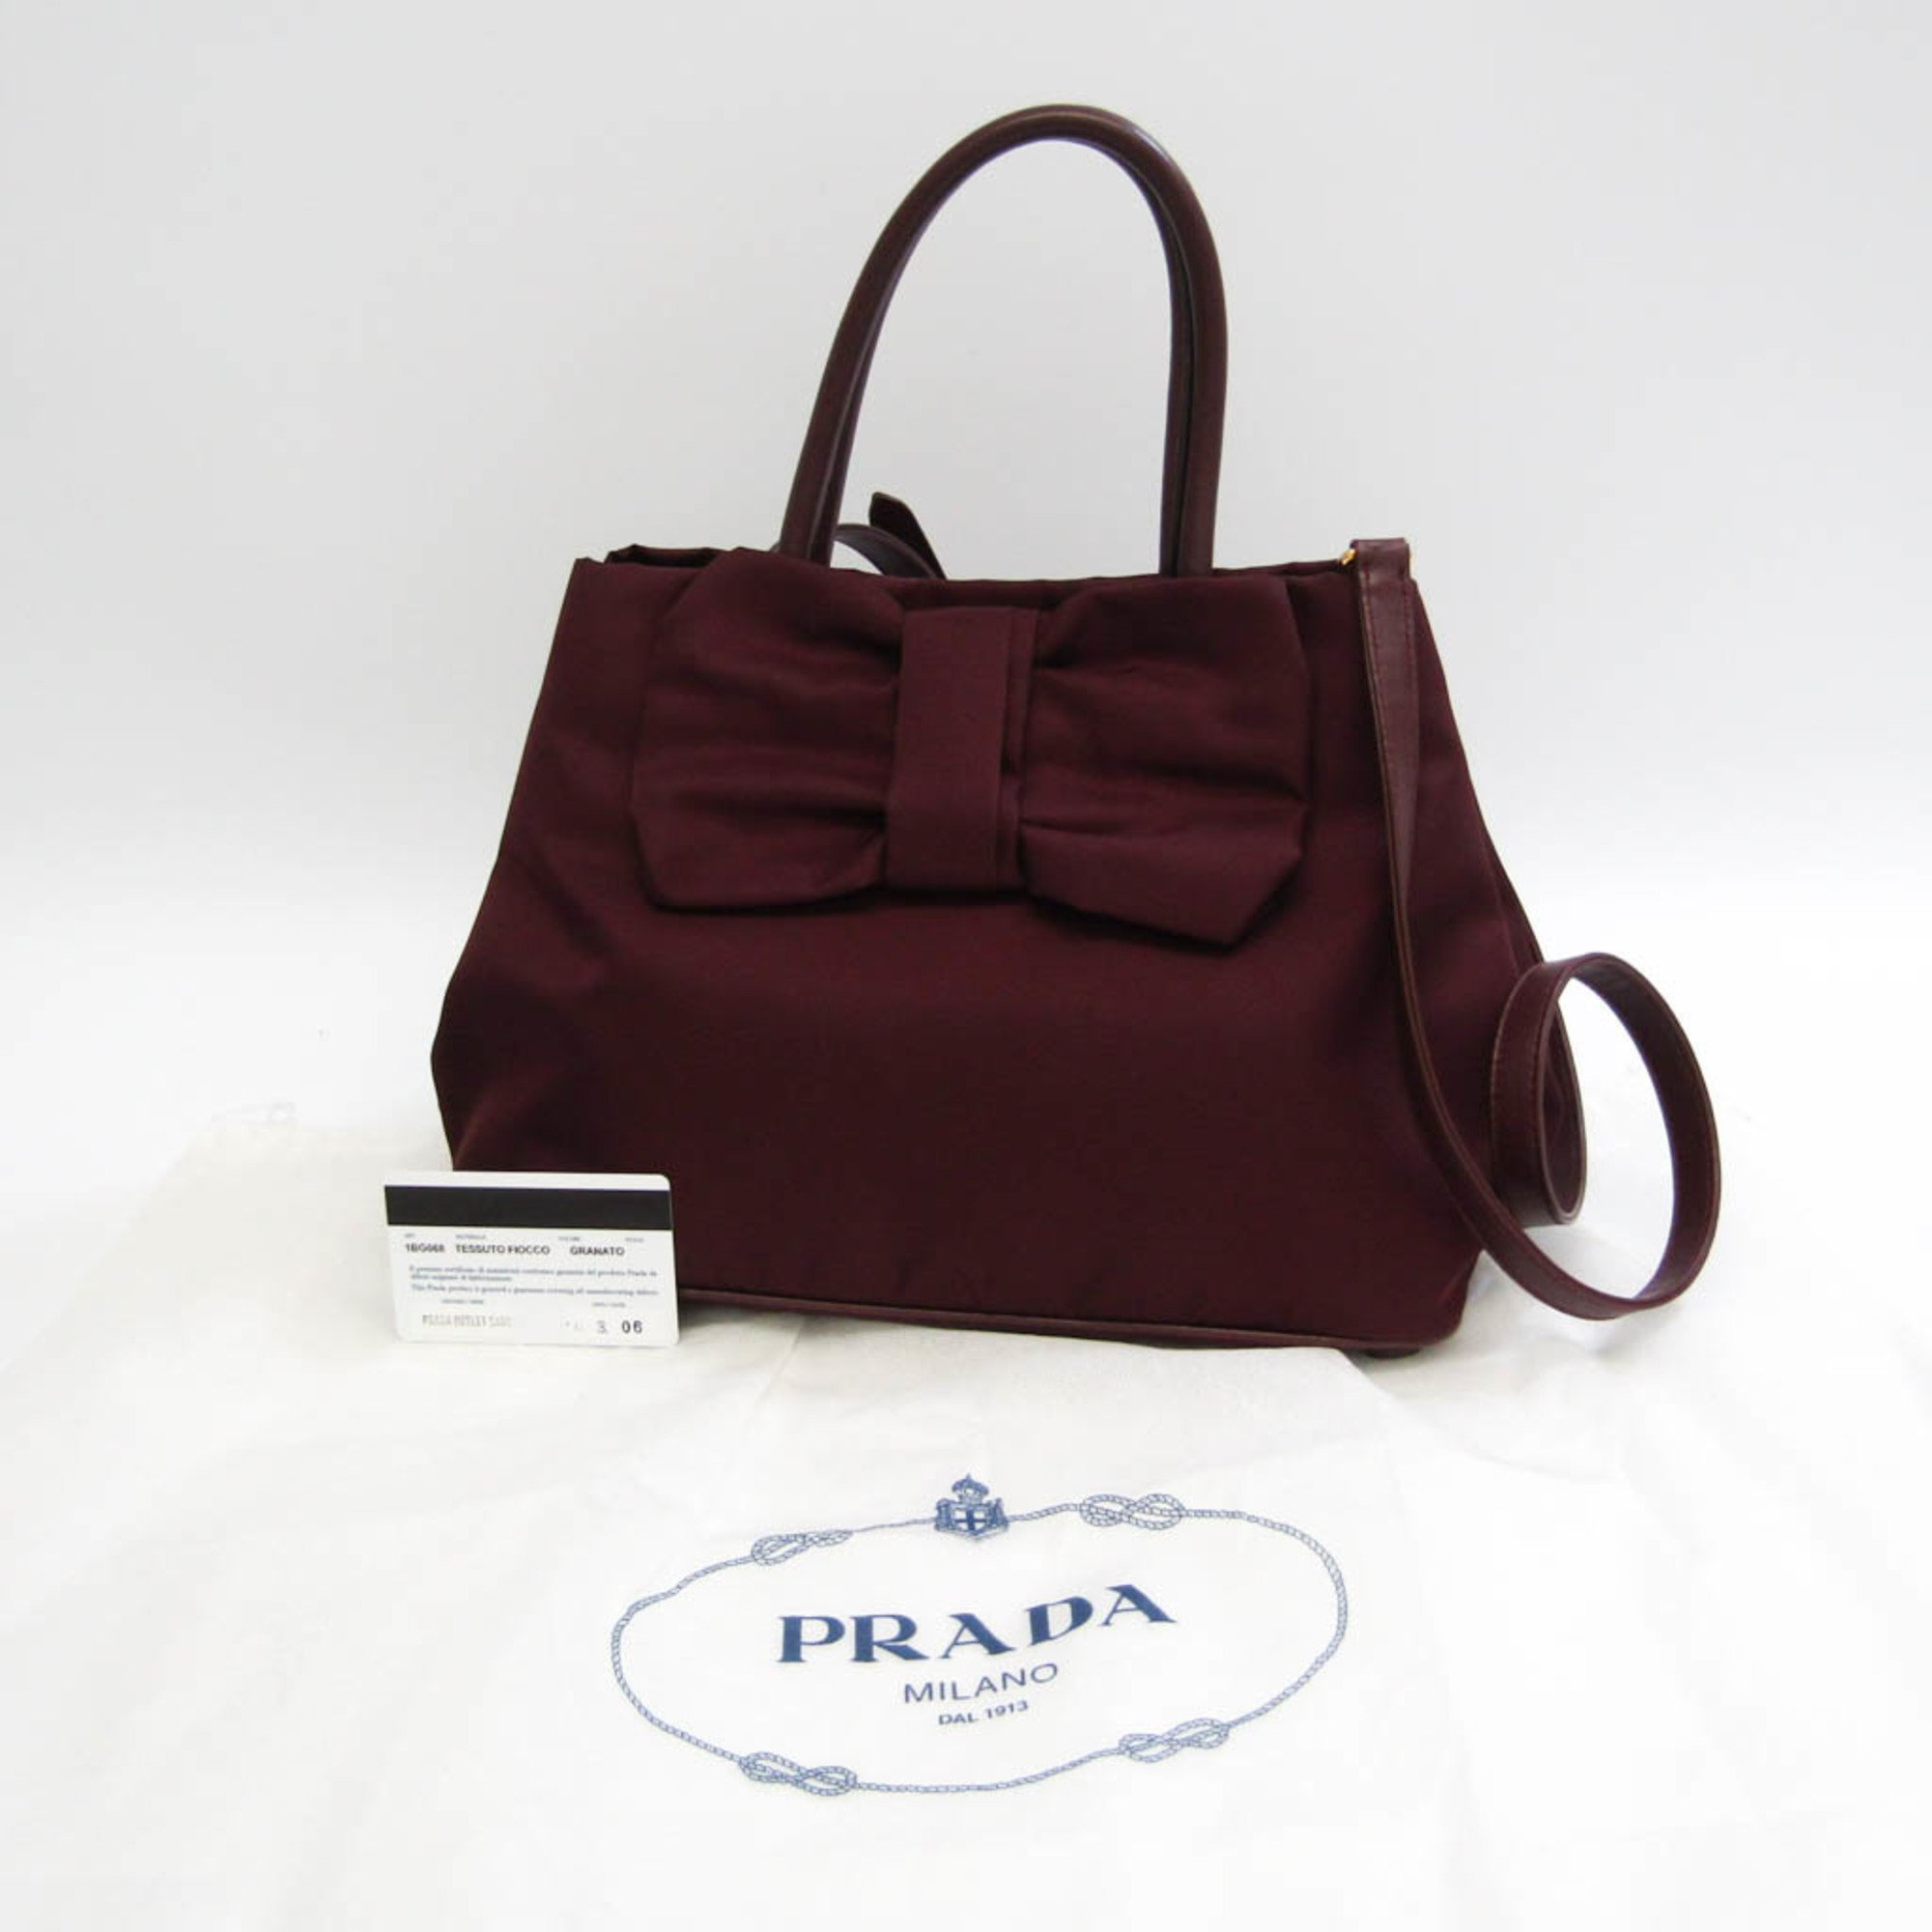 Prada Ribbon 1BG068 Women's Nylon,Leather Handbag,Shoulder Bag Bordeaux